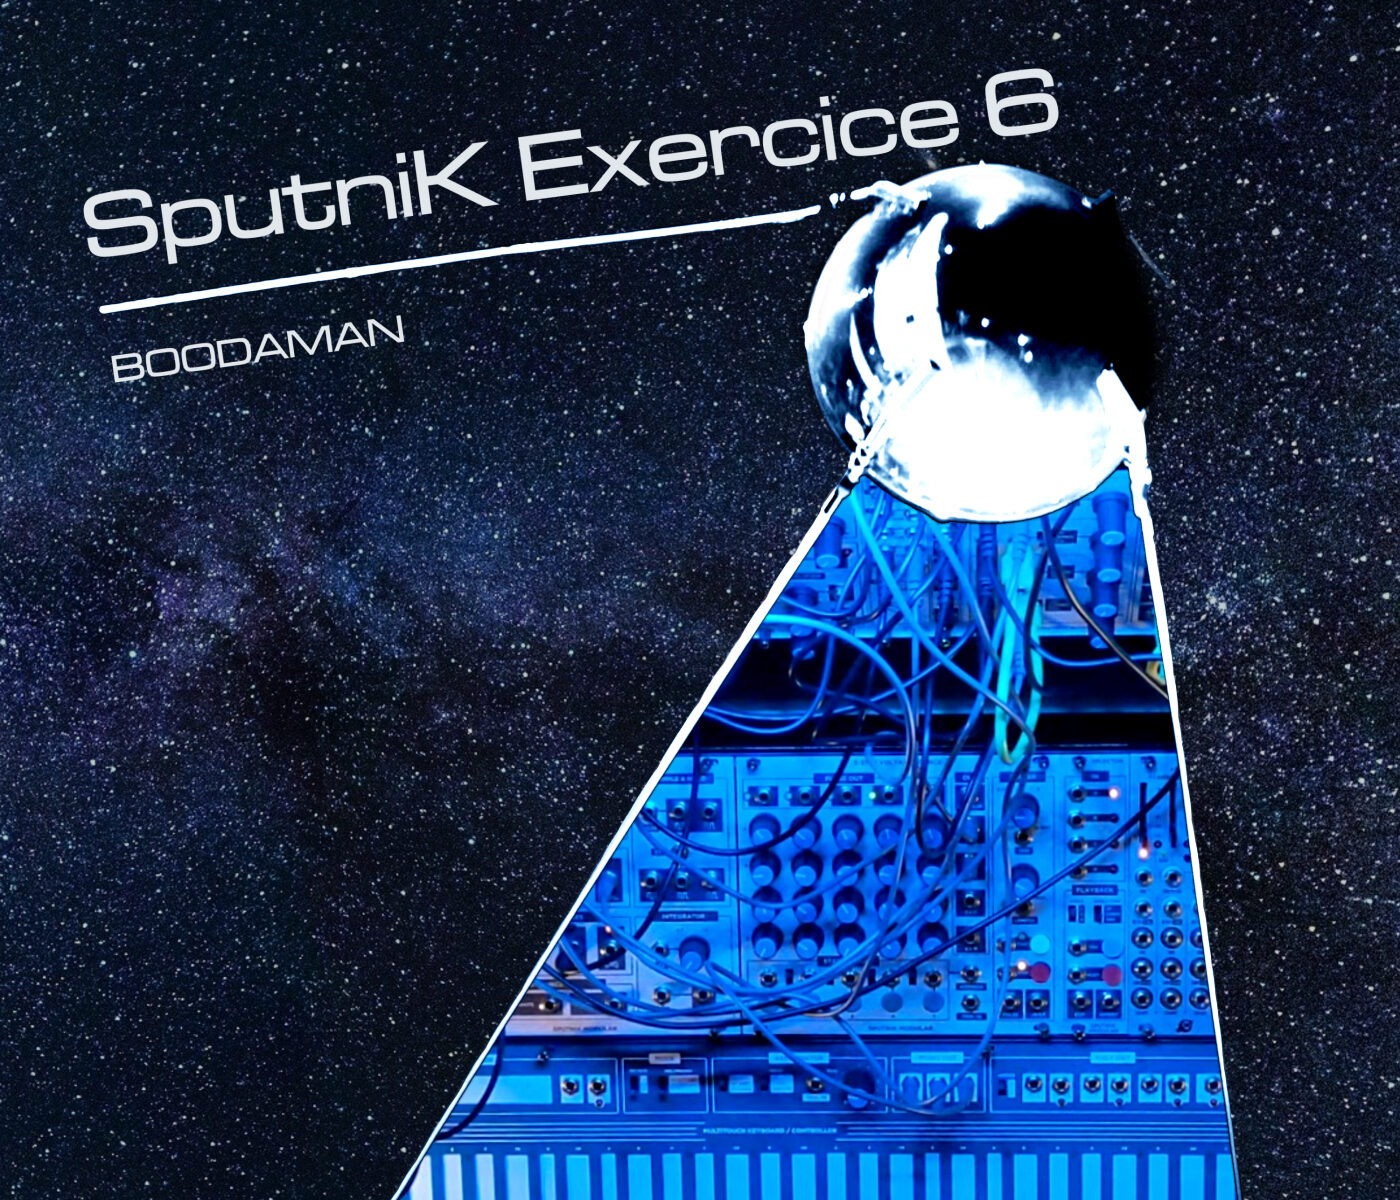 Sputnik Exercice 6 on Bandcamp